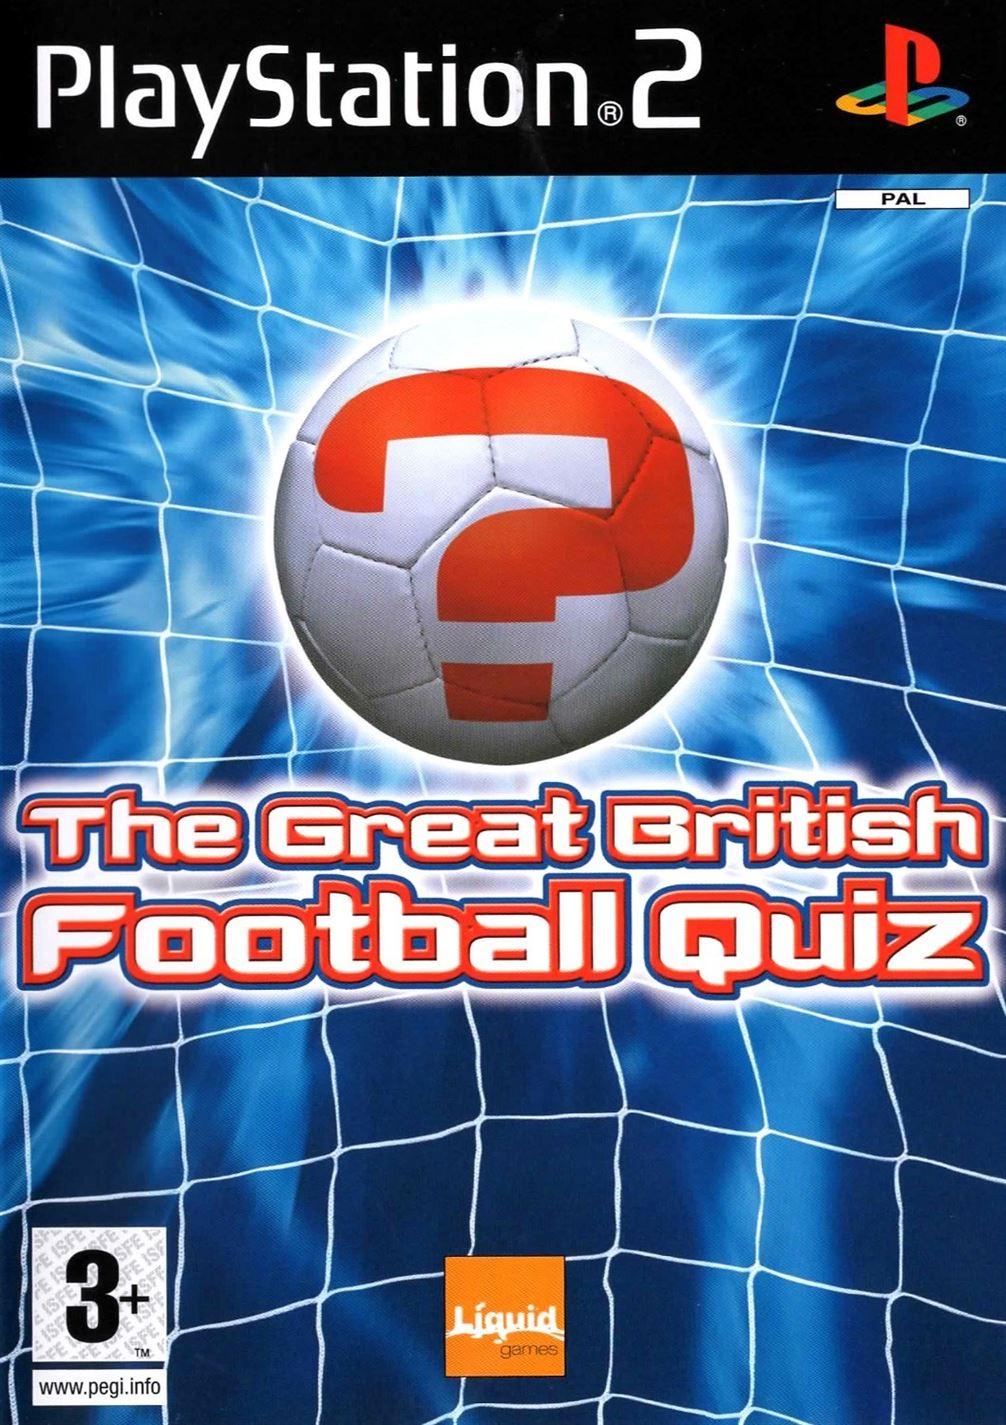 The Great British Football Quiz PS2 (PlayStation 2) - UK Seller